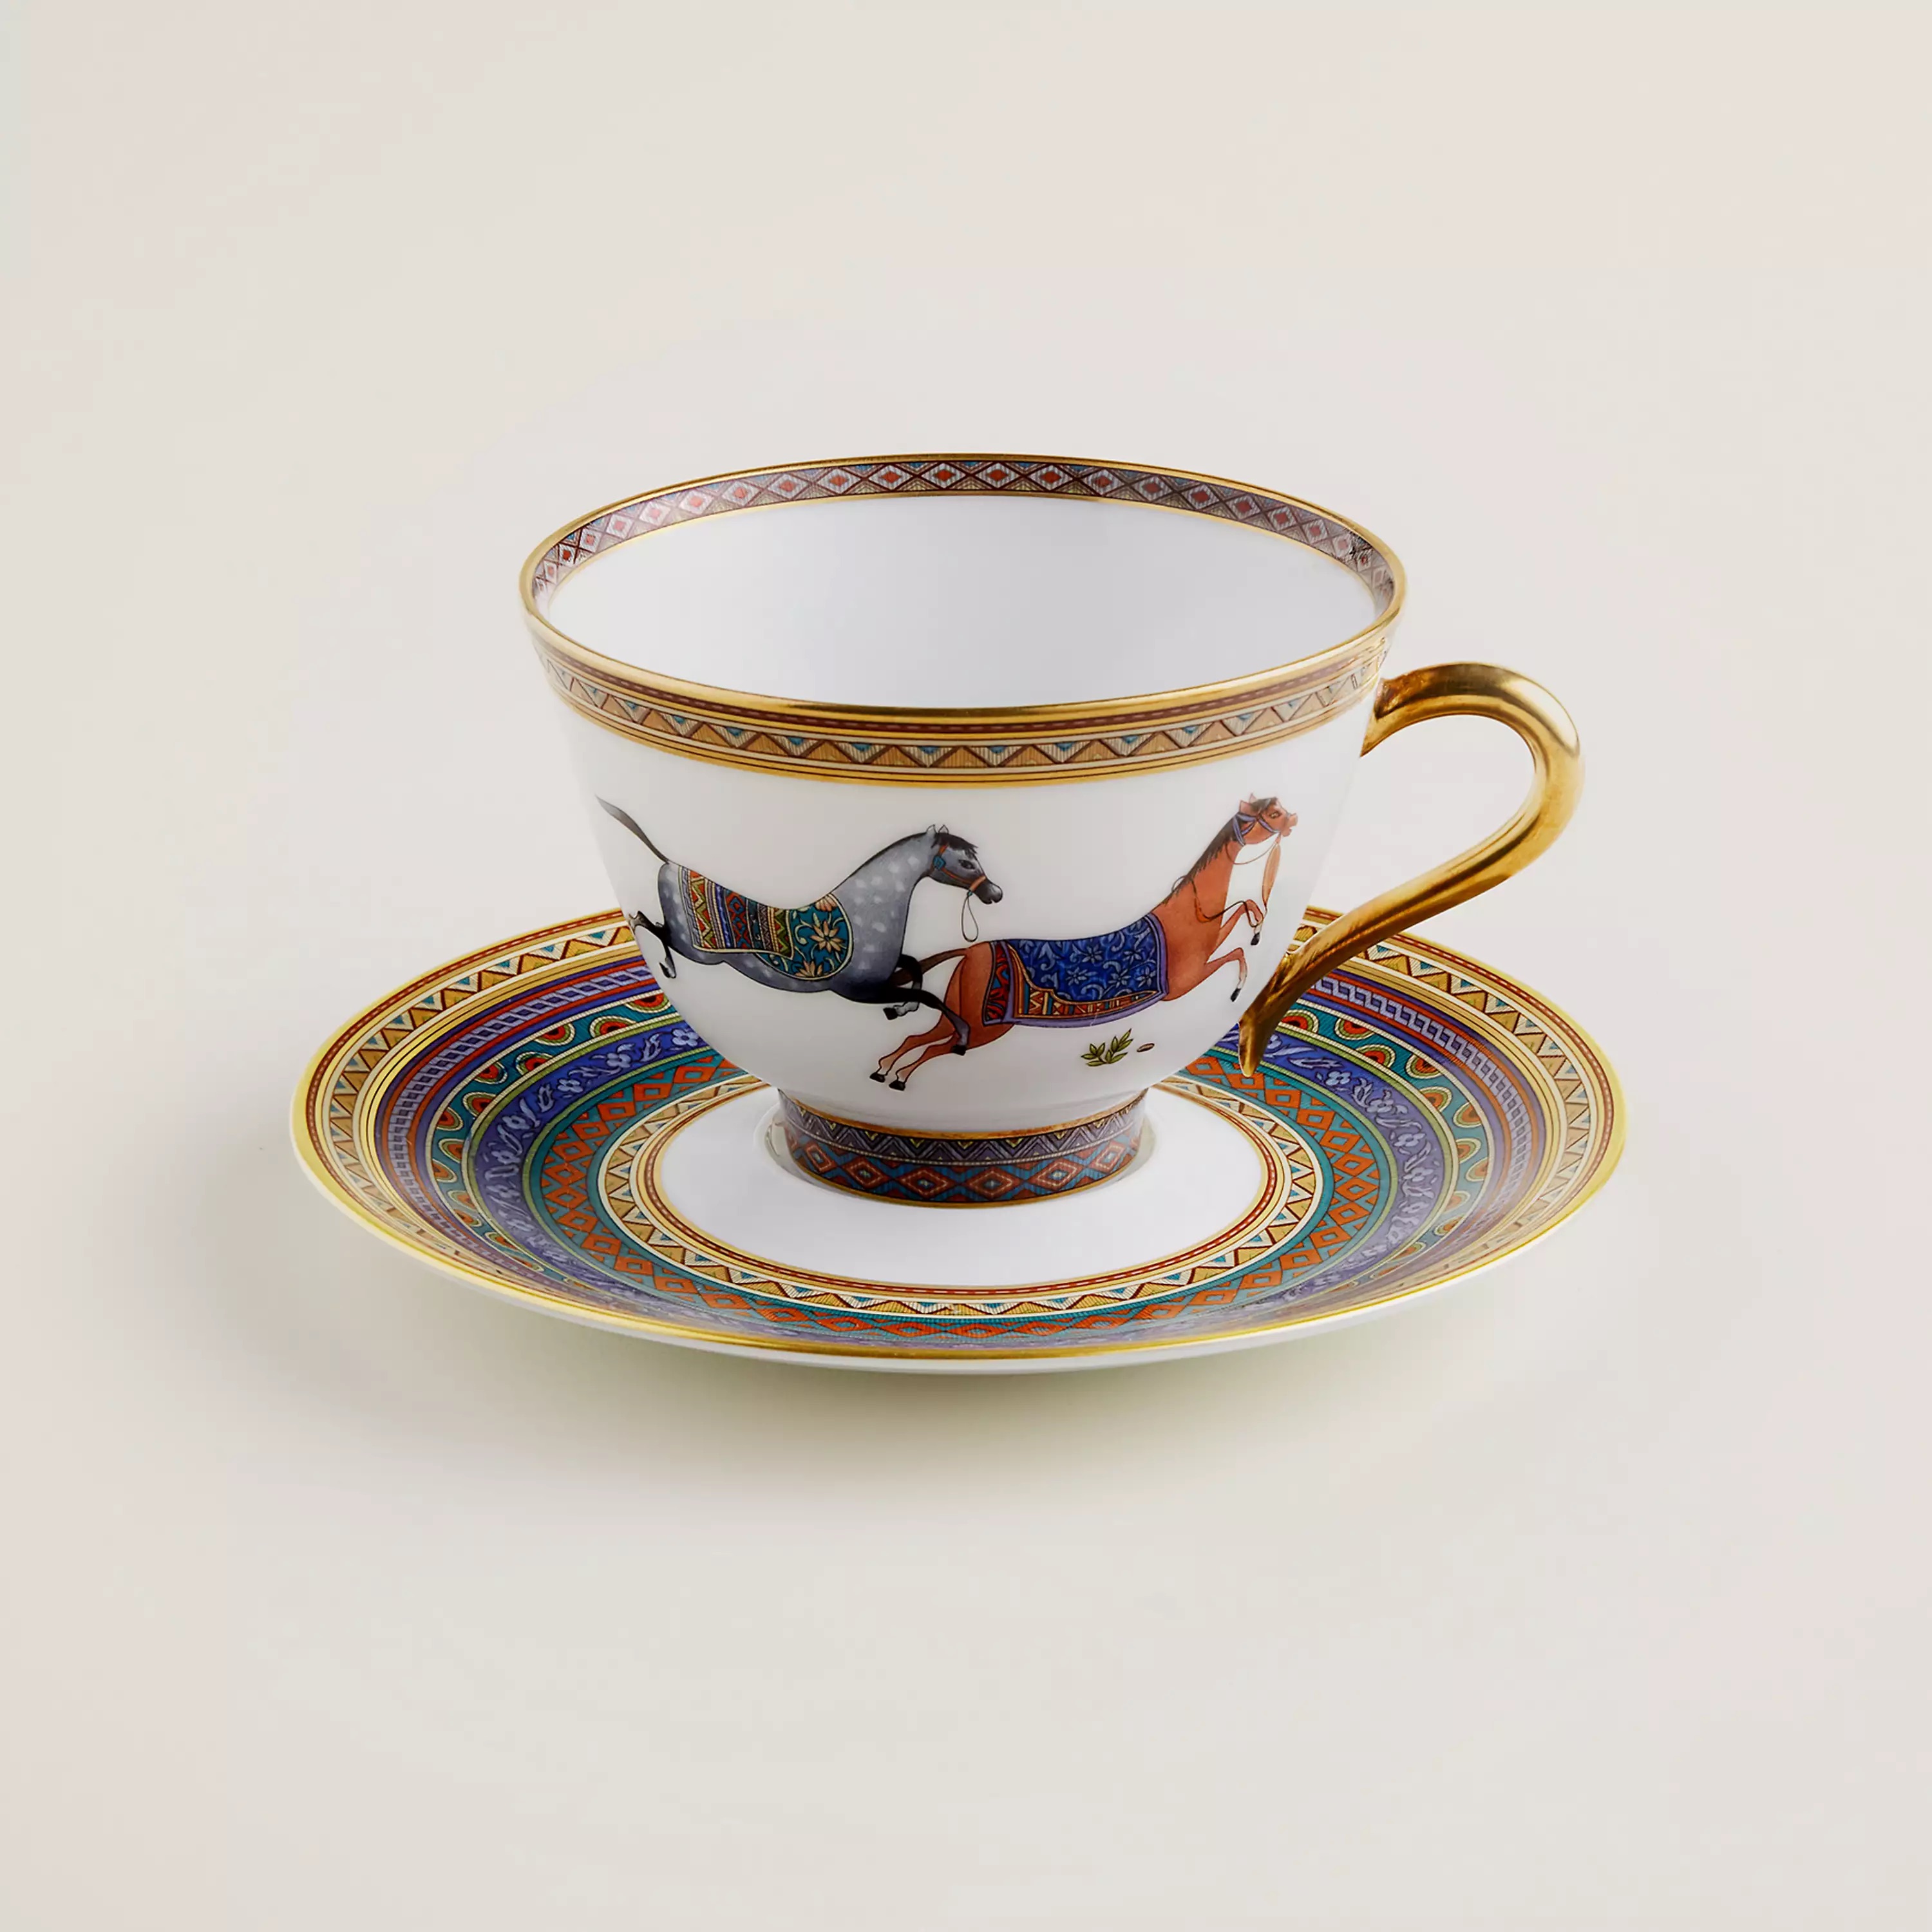 Cheval d'Orient tea cup and saucer n°4 in porcelain, capacity 7.8 fl. oz., $475. Photo via Hermès.com.